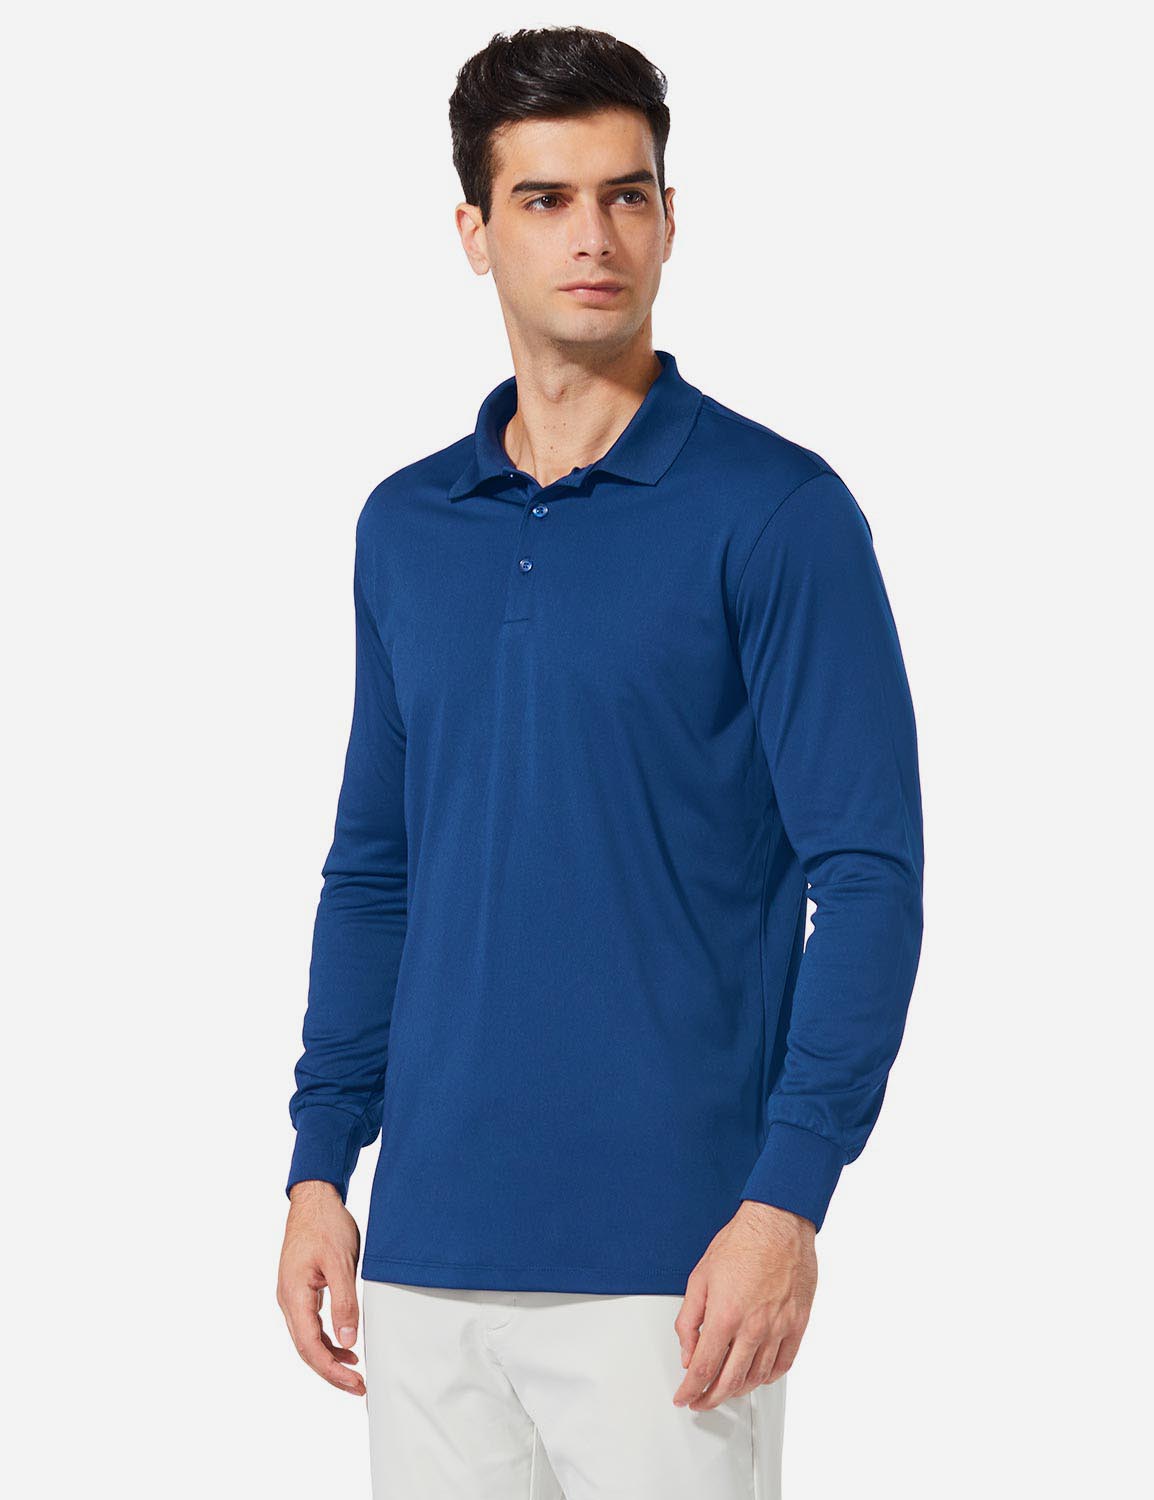 Baleaf Mens UPF50+ Button Up Long Sleeved Cuffed Polo Golf afa002 Royal Blue Side